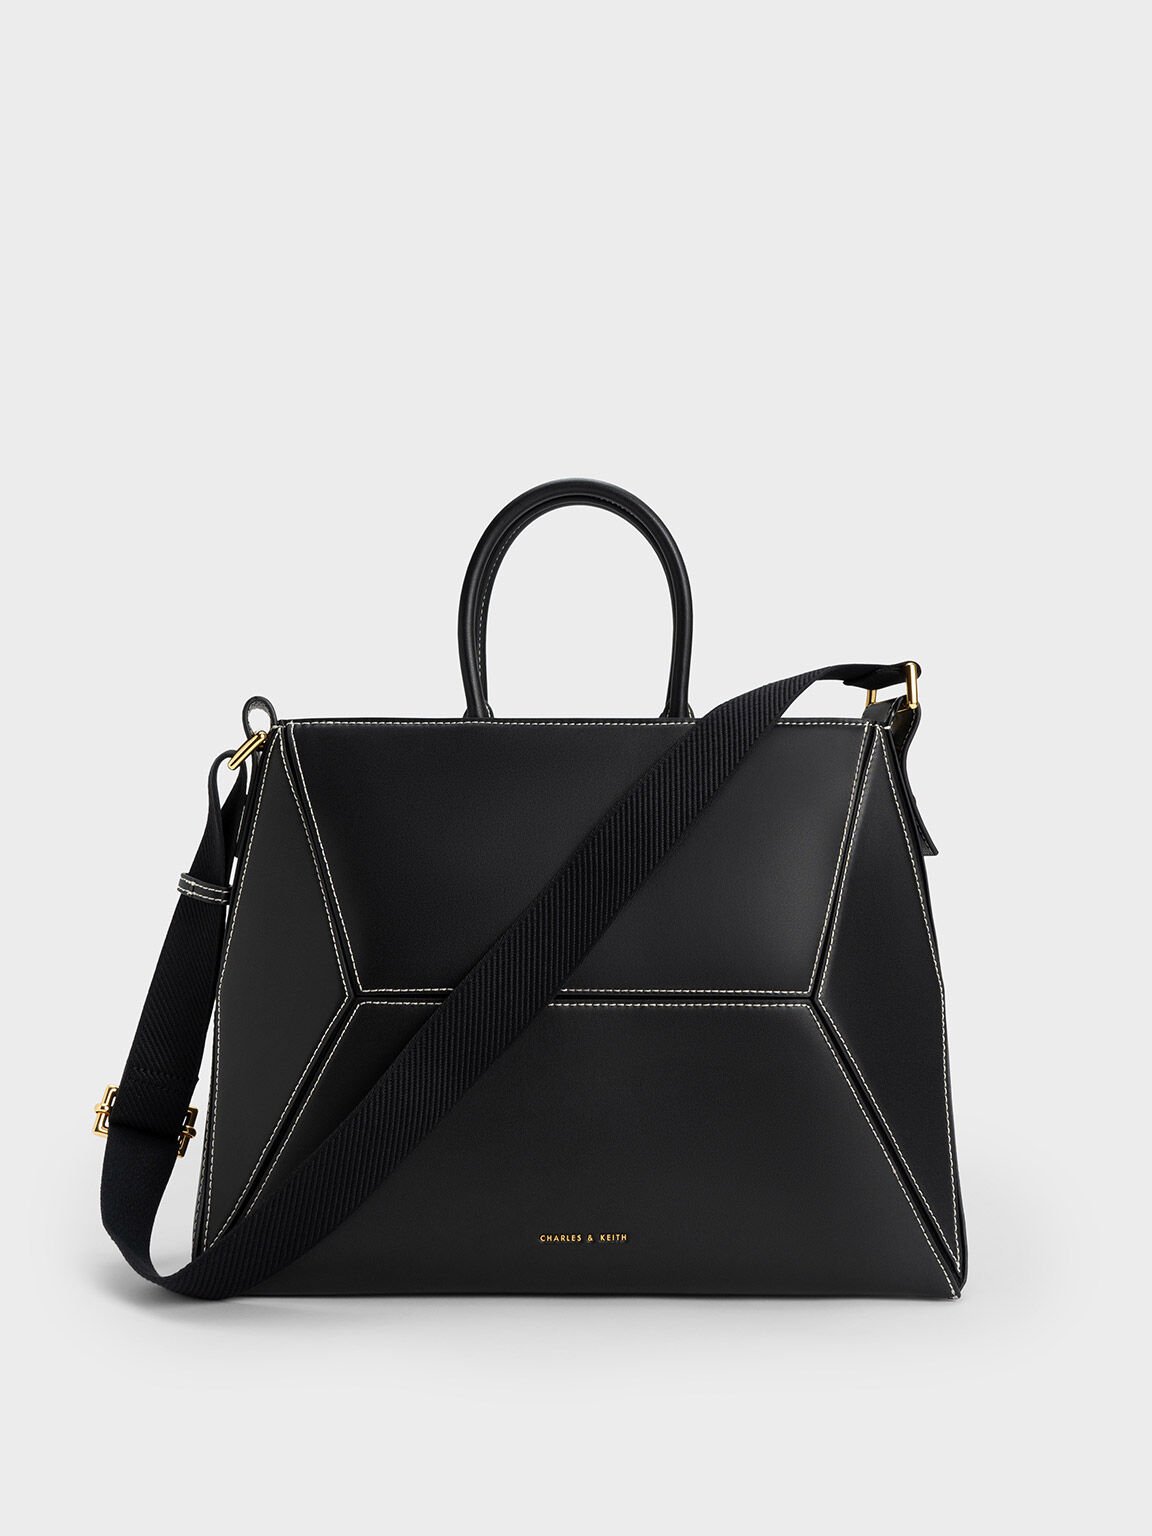 Japan Style Geometric bag Women Handbags Fashion Casual Tote